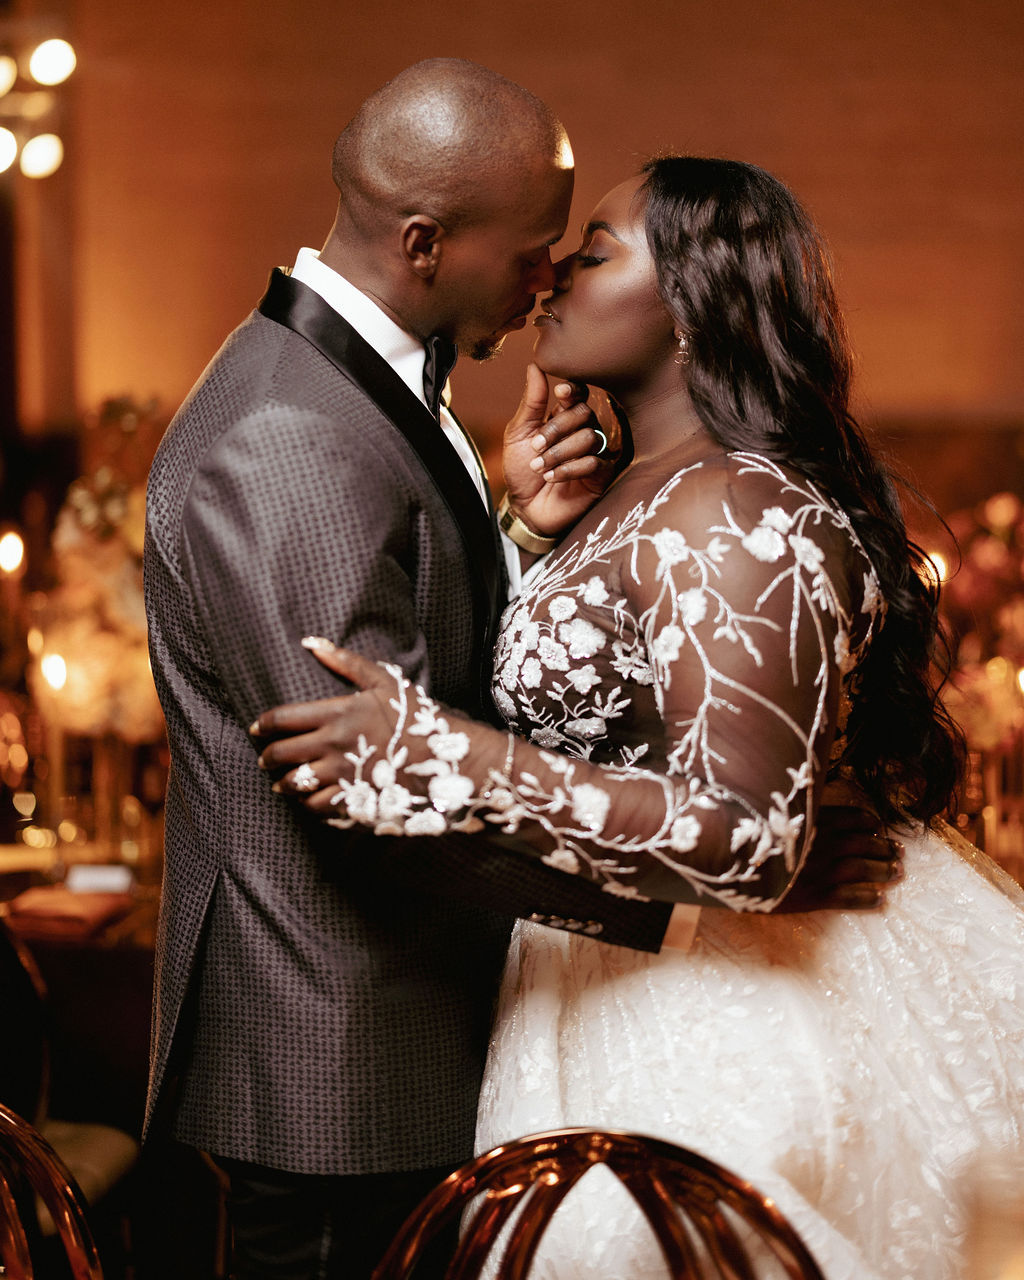 Danielle Brooks and her husband kiss post-wedding